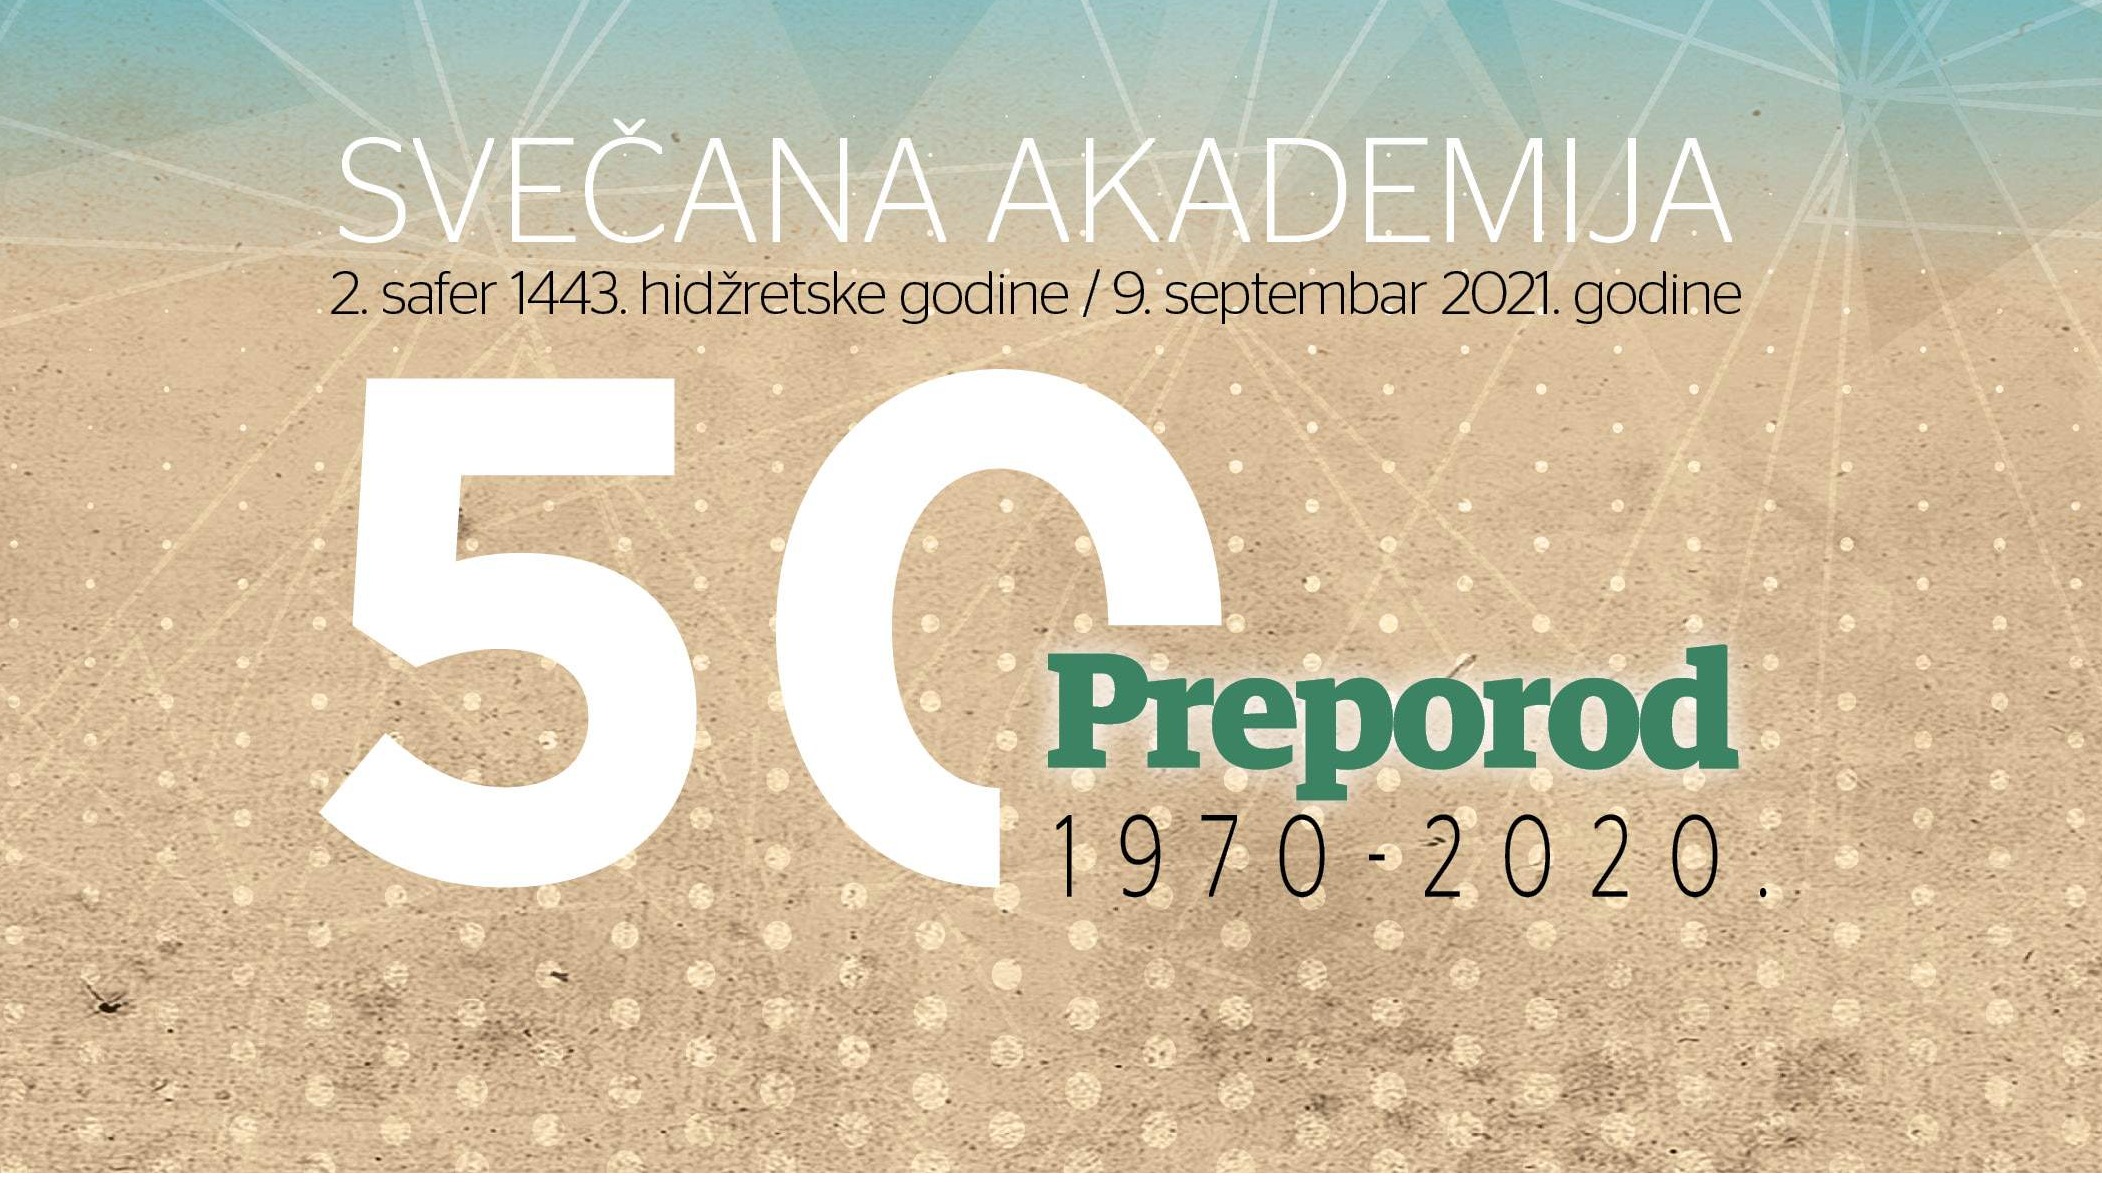 Svečana akademija povodom 50. godišnjice Preporoda 9. septembra